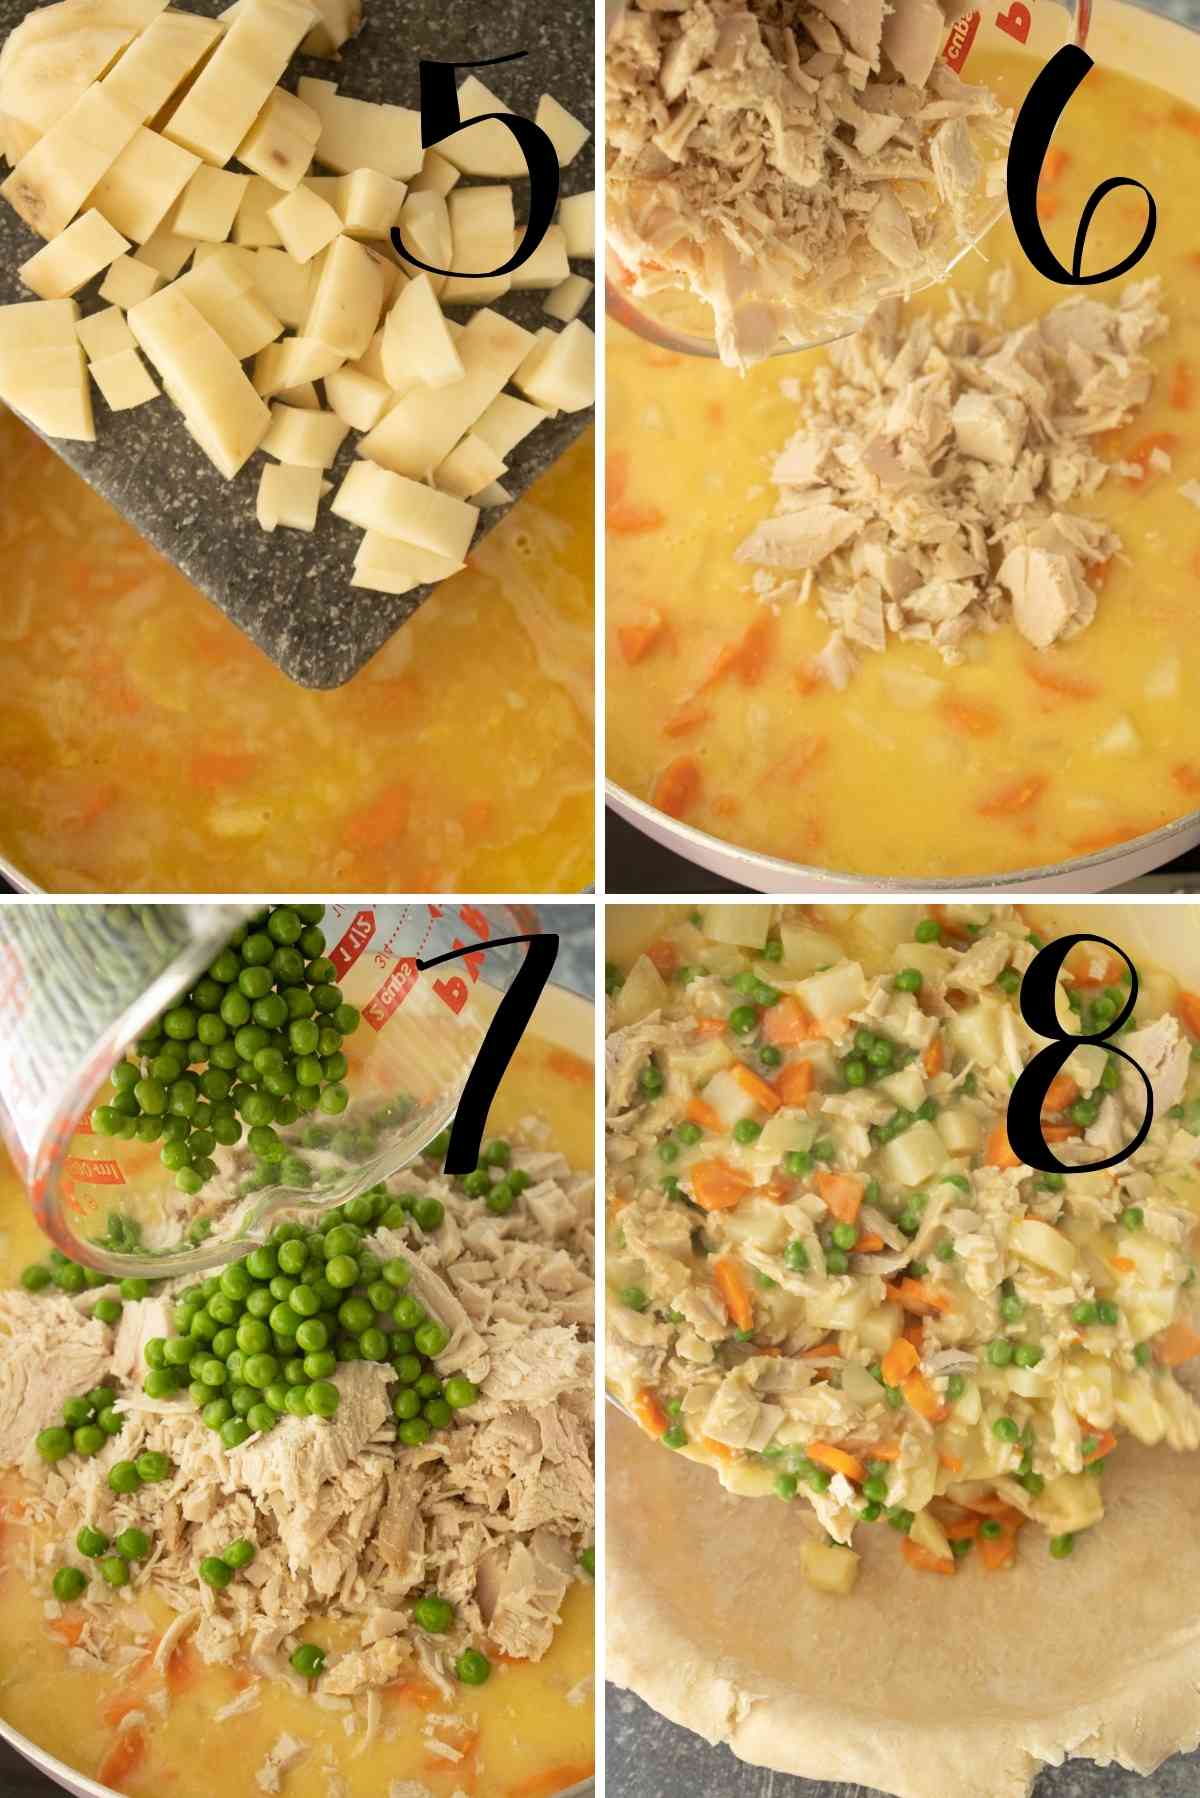 Add the potatoes, turkey, velveeta and cheese to make a creamy filling!